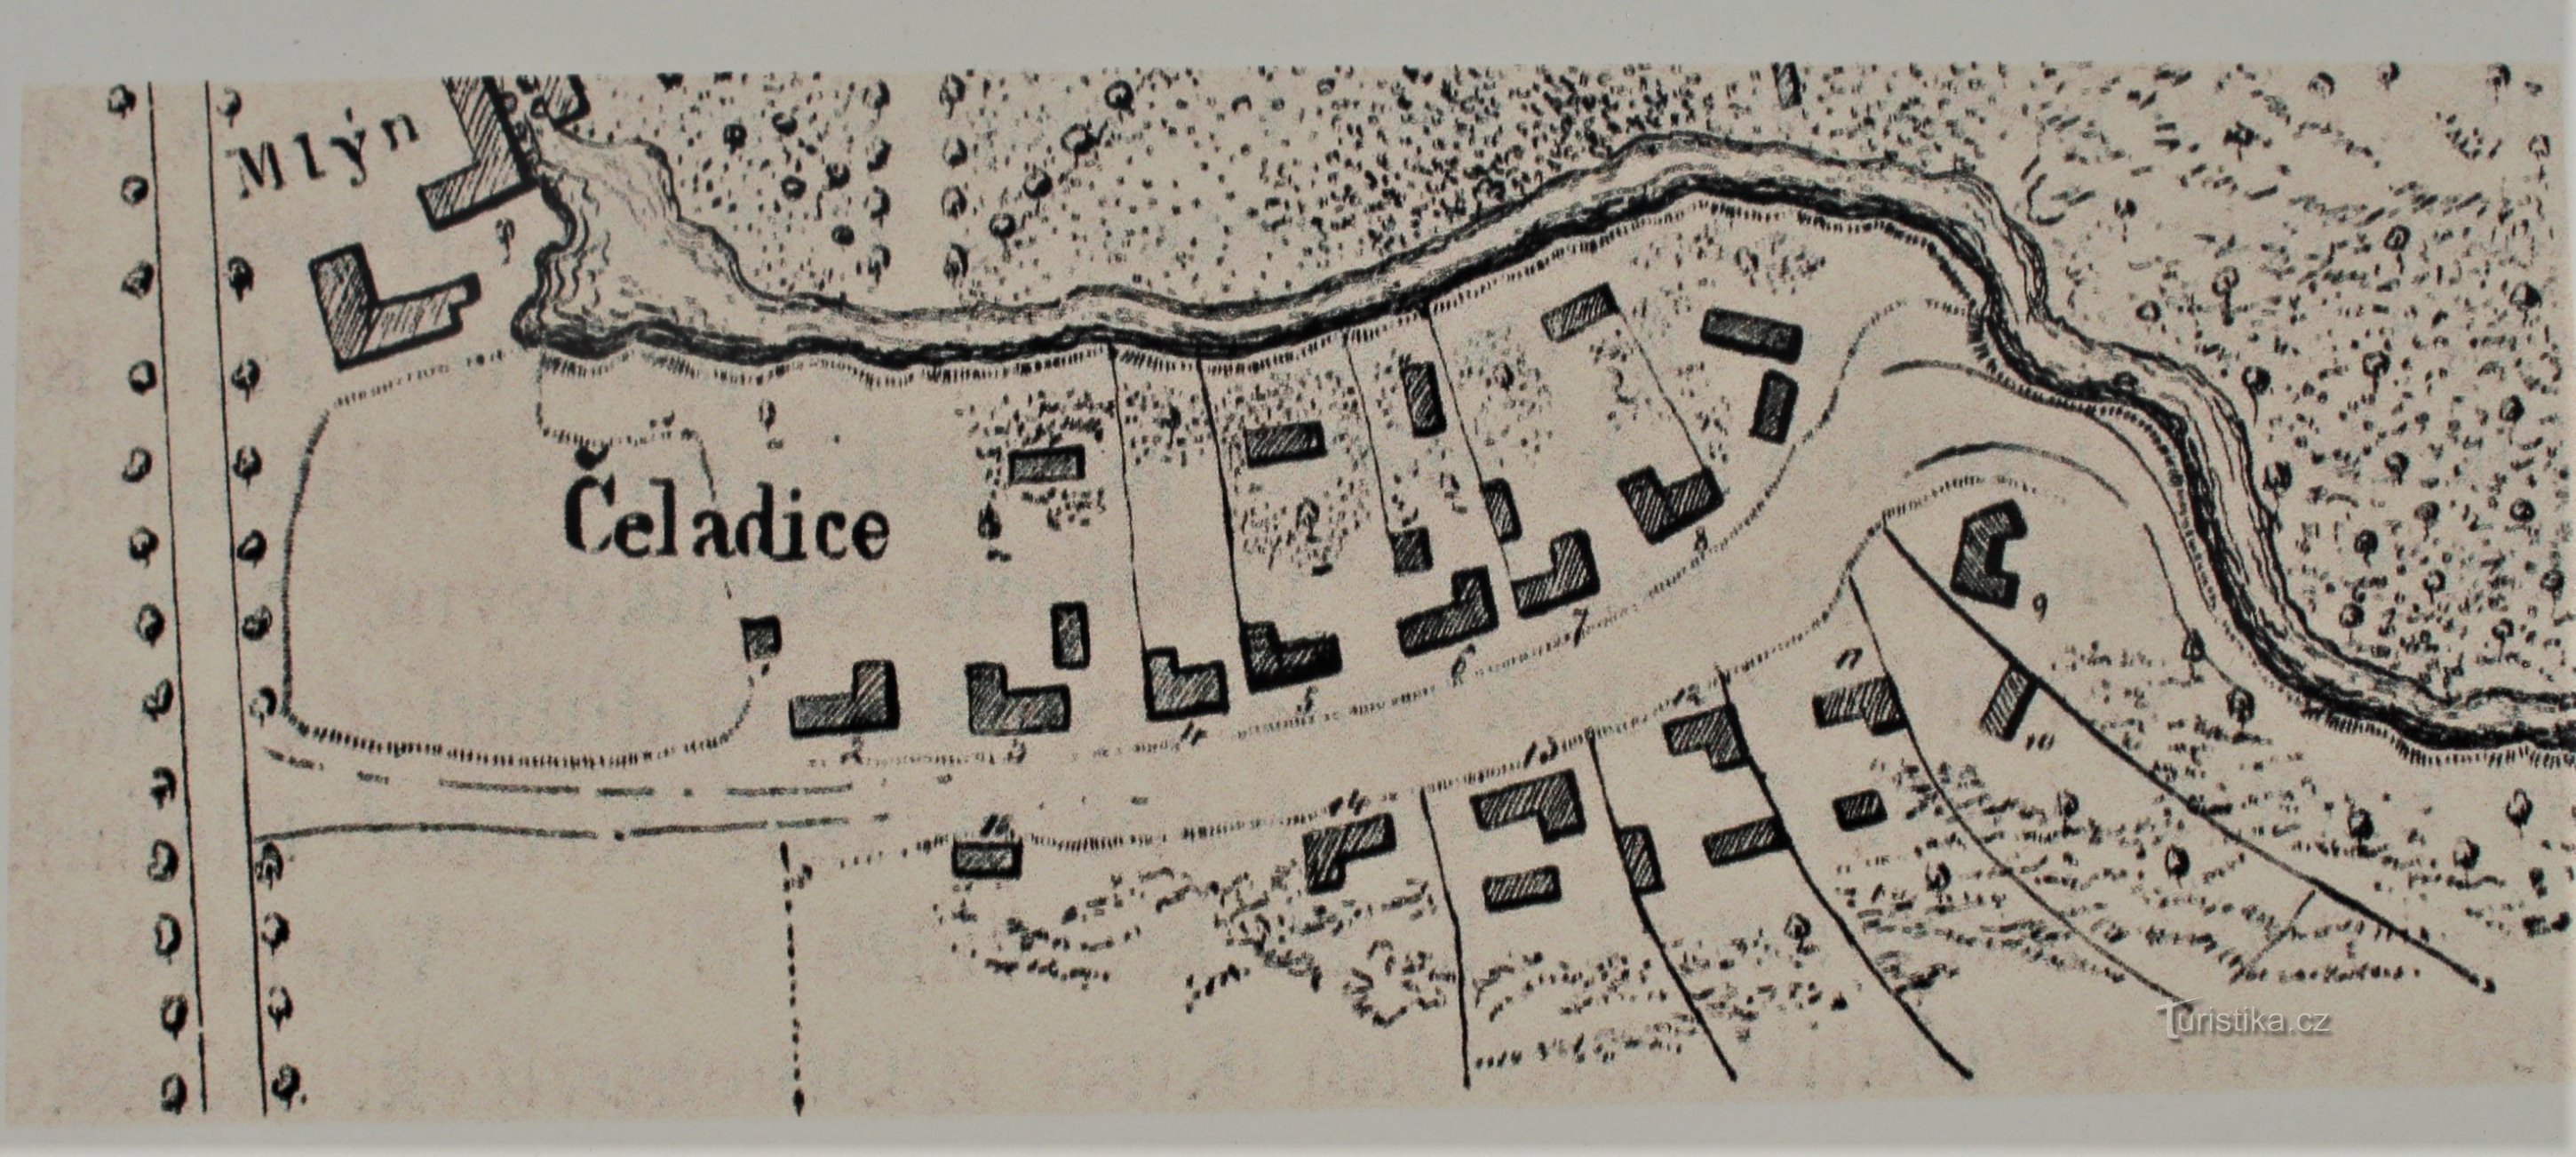 Kaart van Čeladice uit 1774 (afkomstig van het informatiebord)